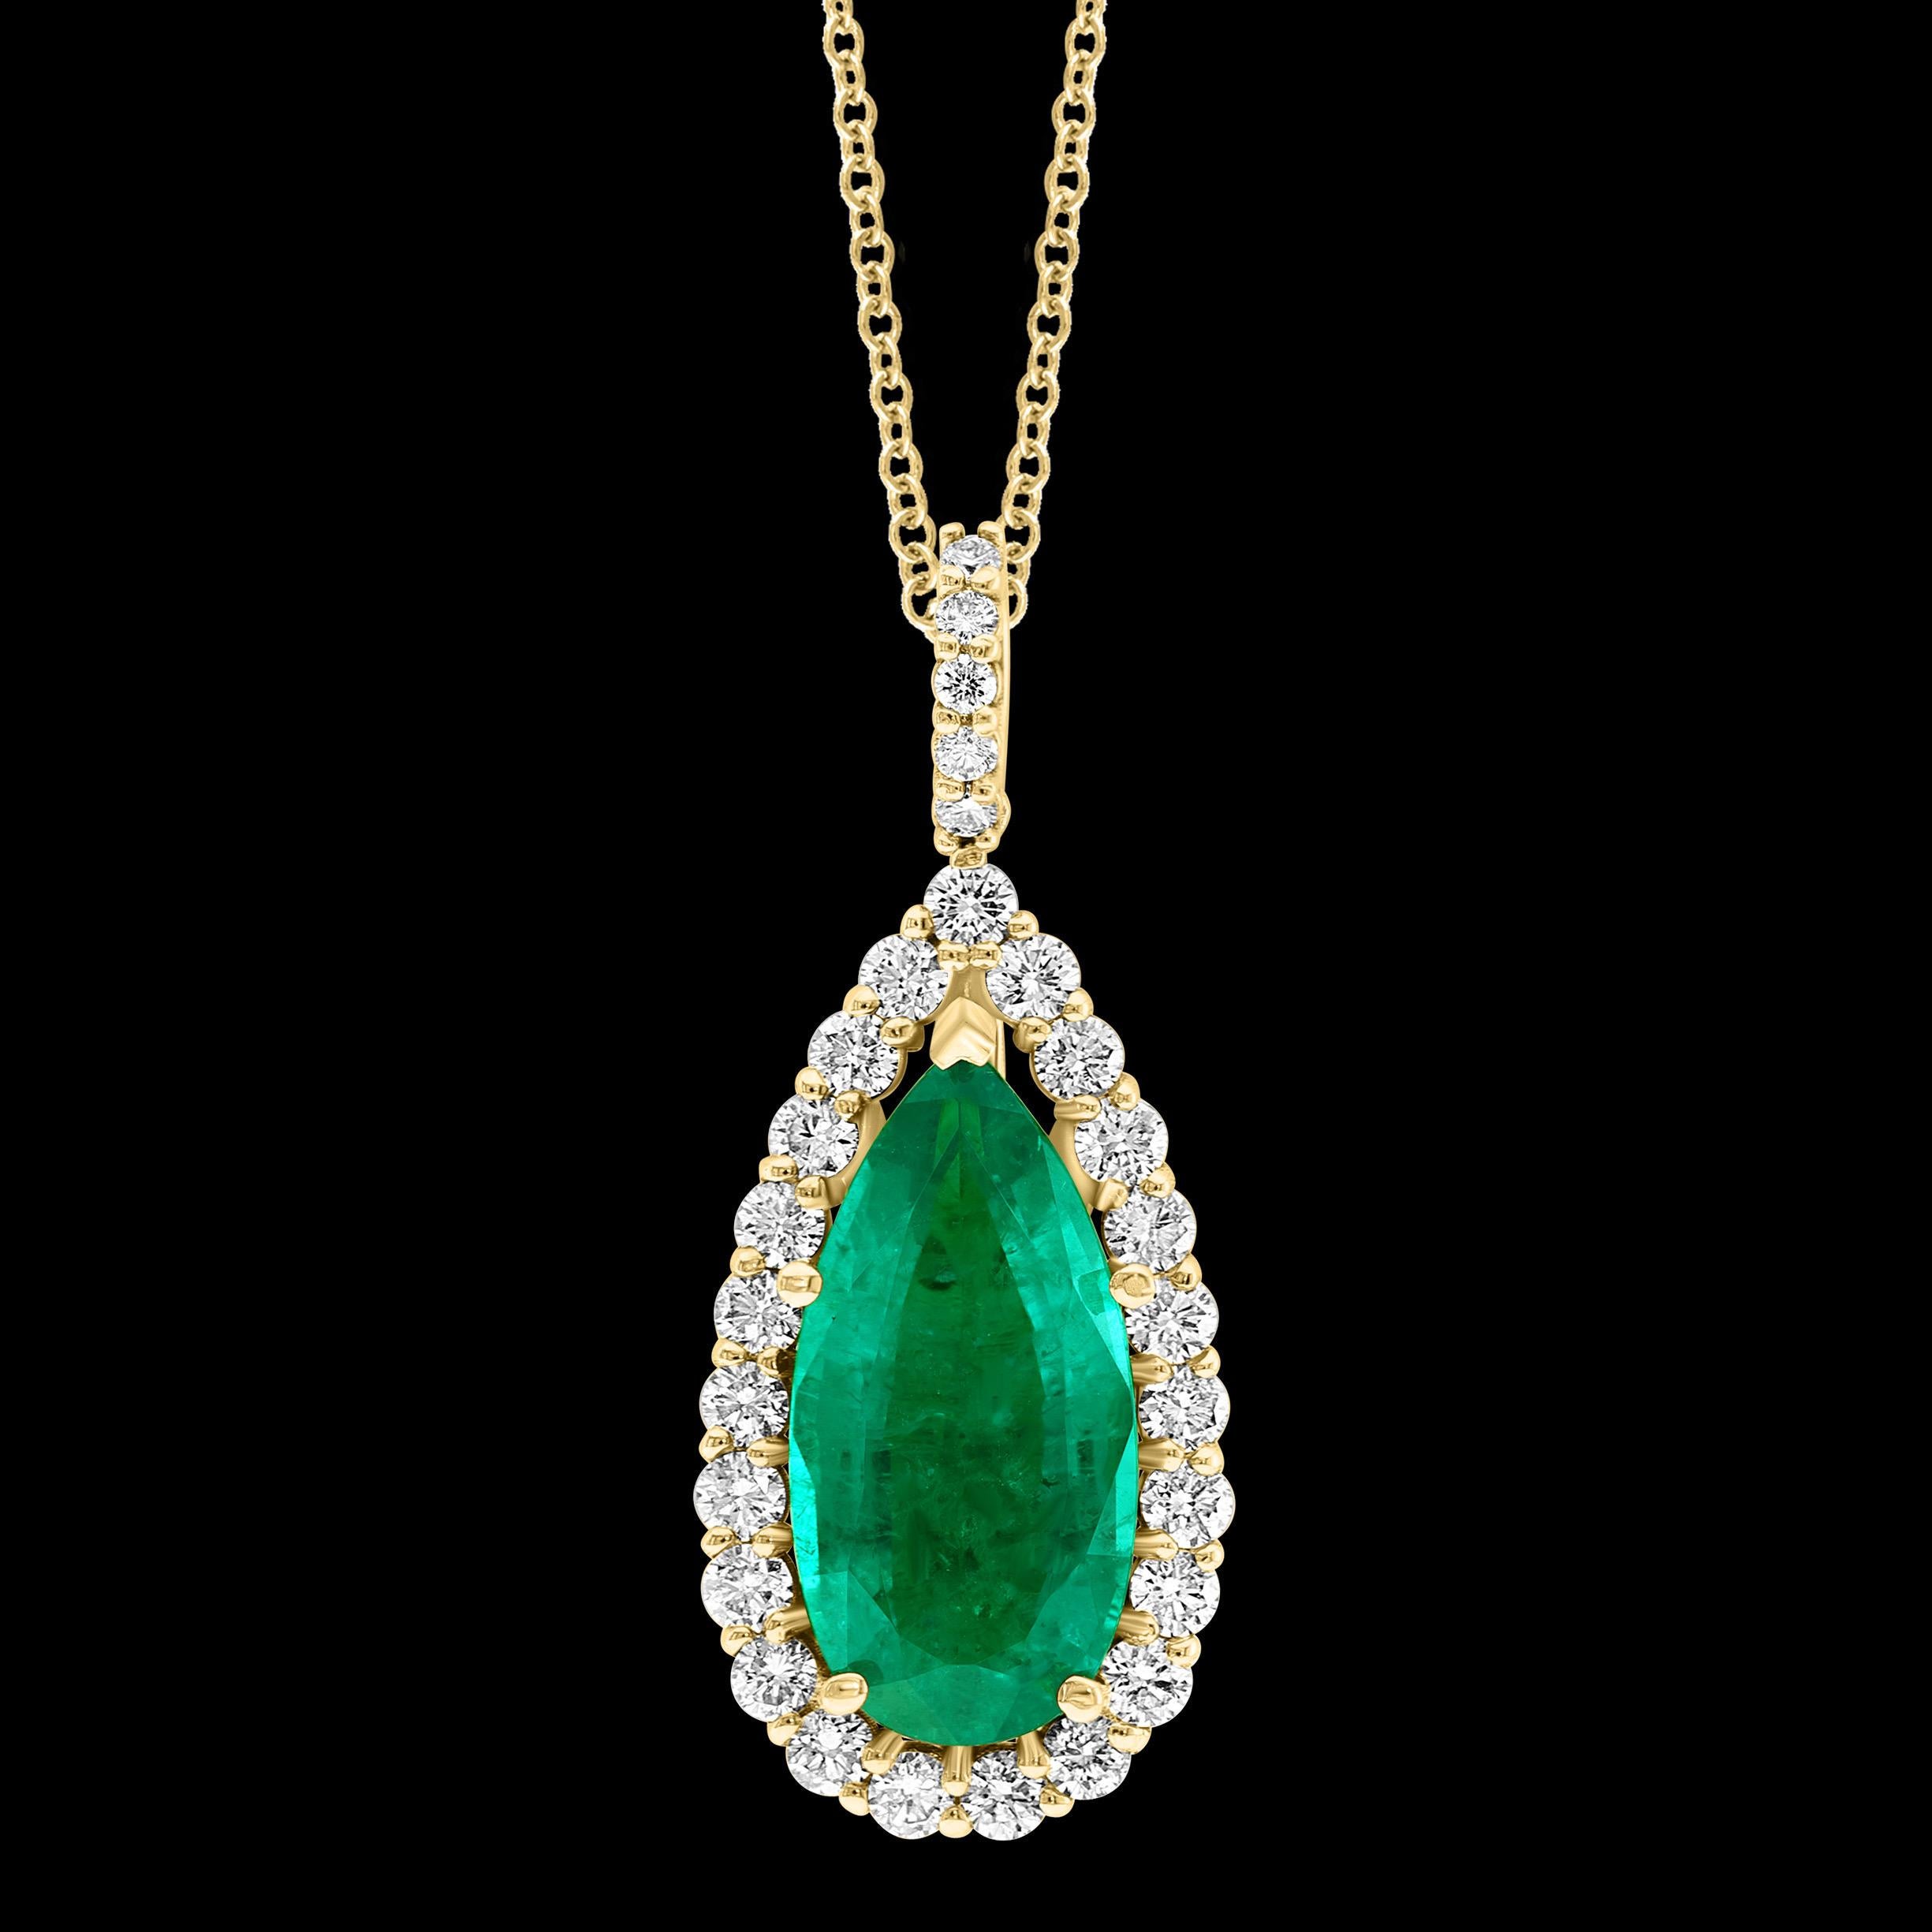 11 Carat Pear Shape Colombian Emerald and Diamond Pendant Necklace Enhancer For Sale 2